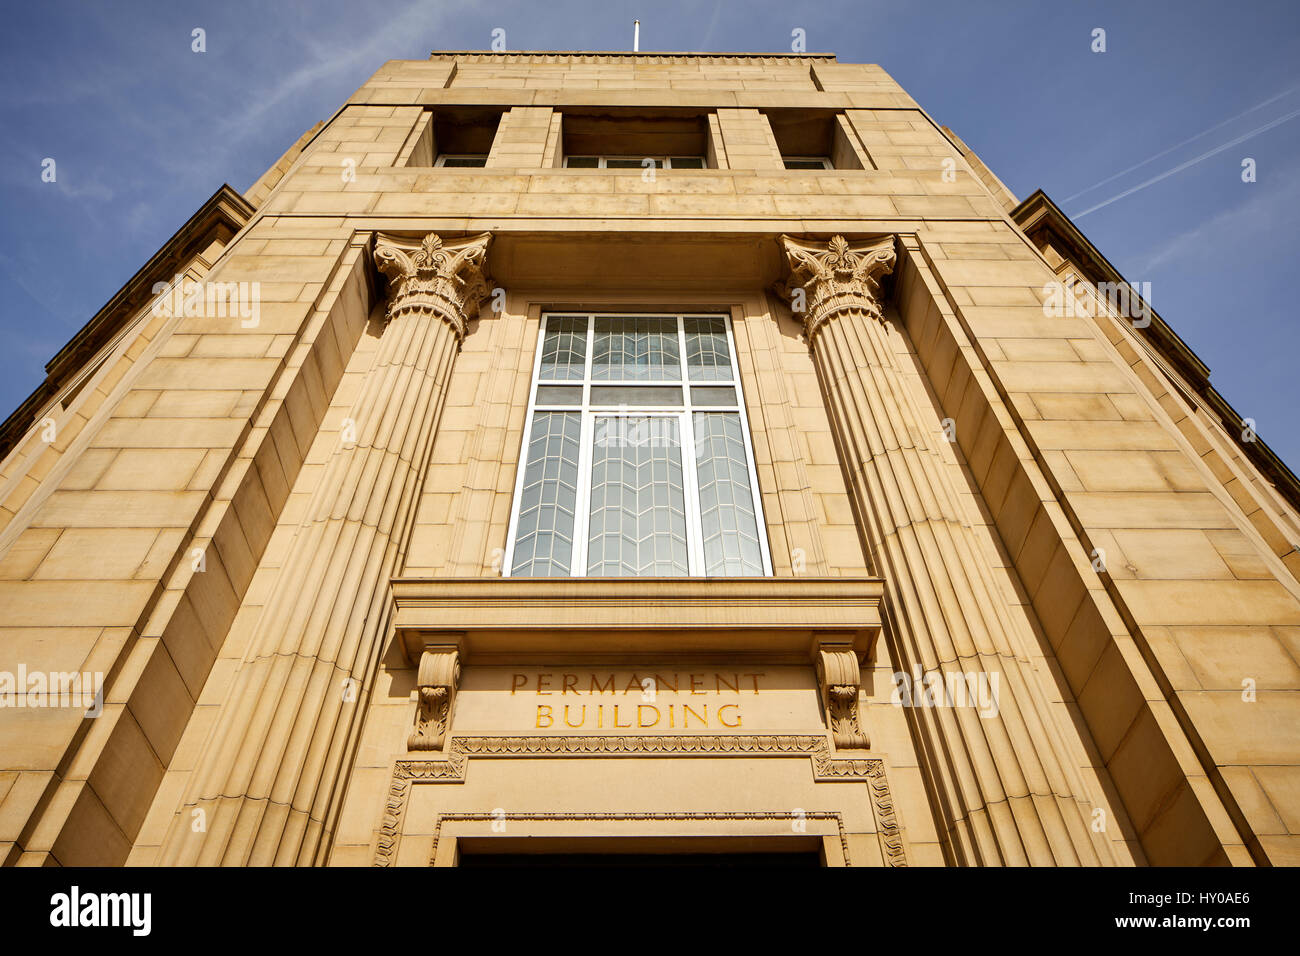 Permanent Building, Regent Street, Barnsley town centre, South Yorkshire, England. UK. Stock Photo